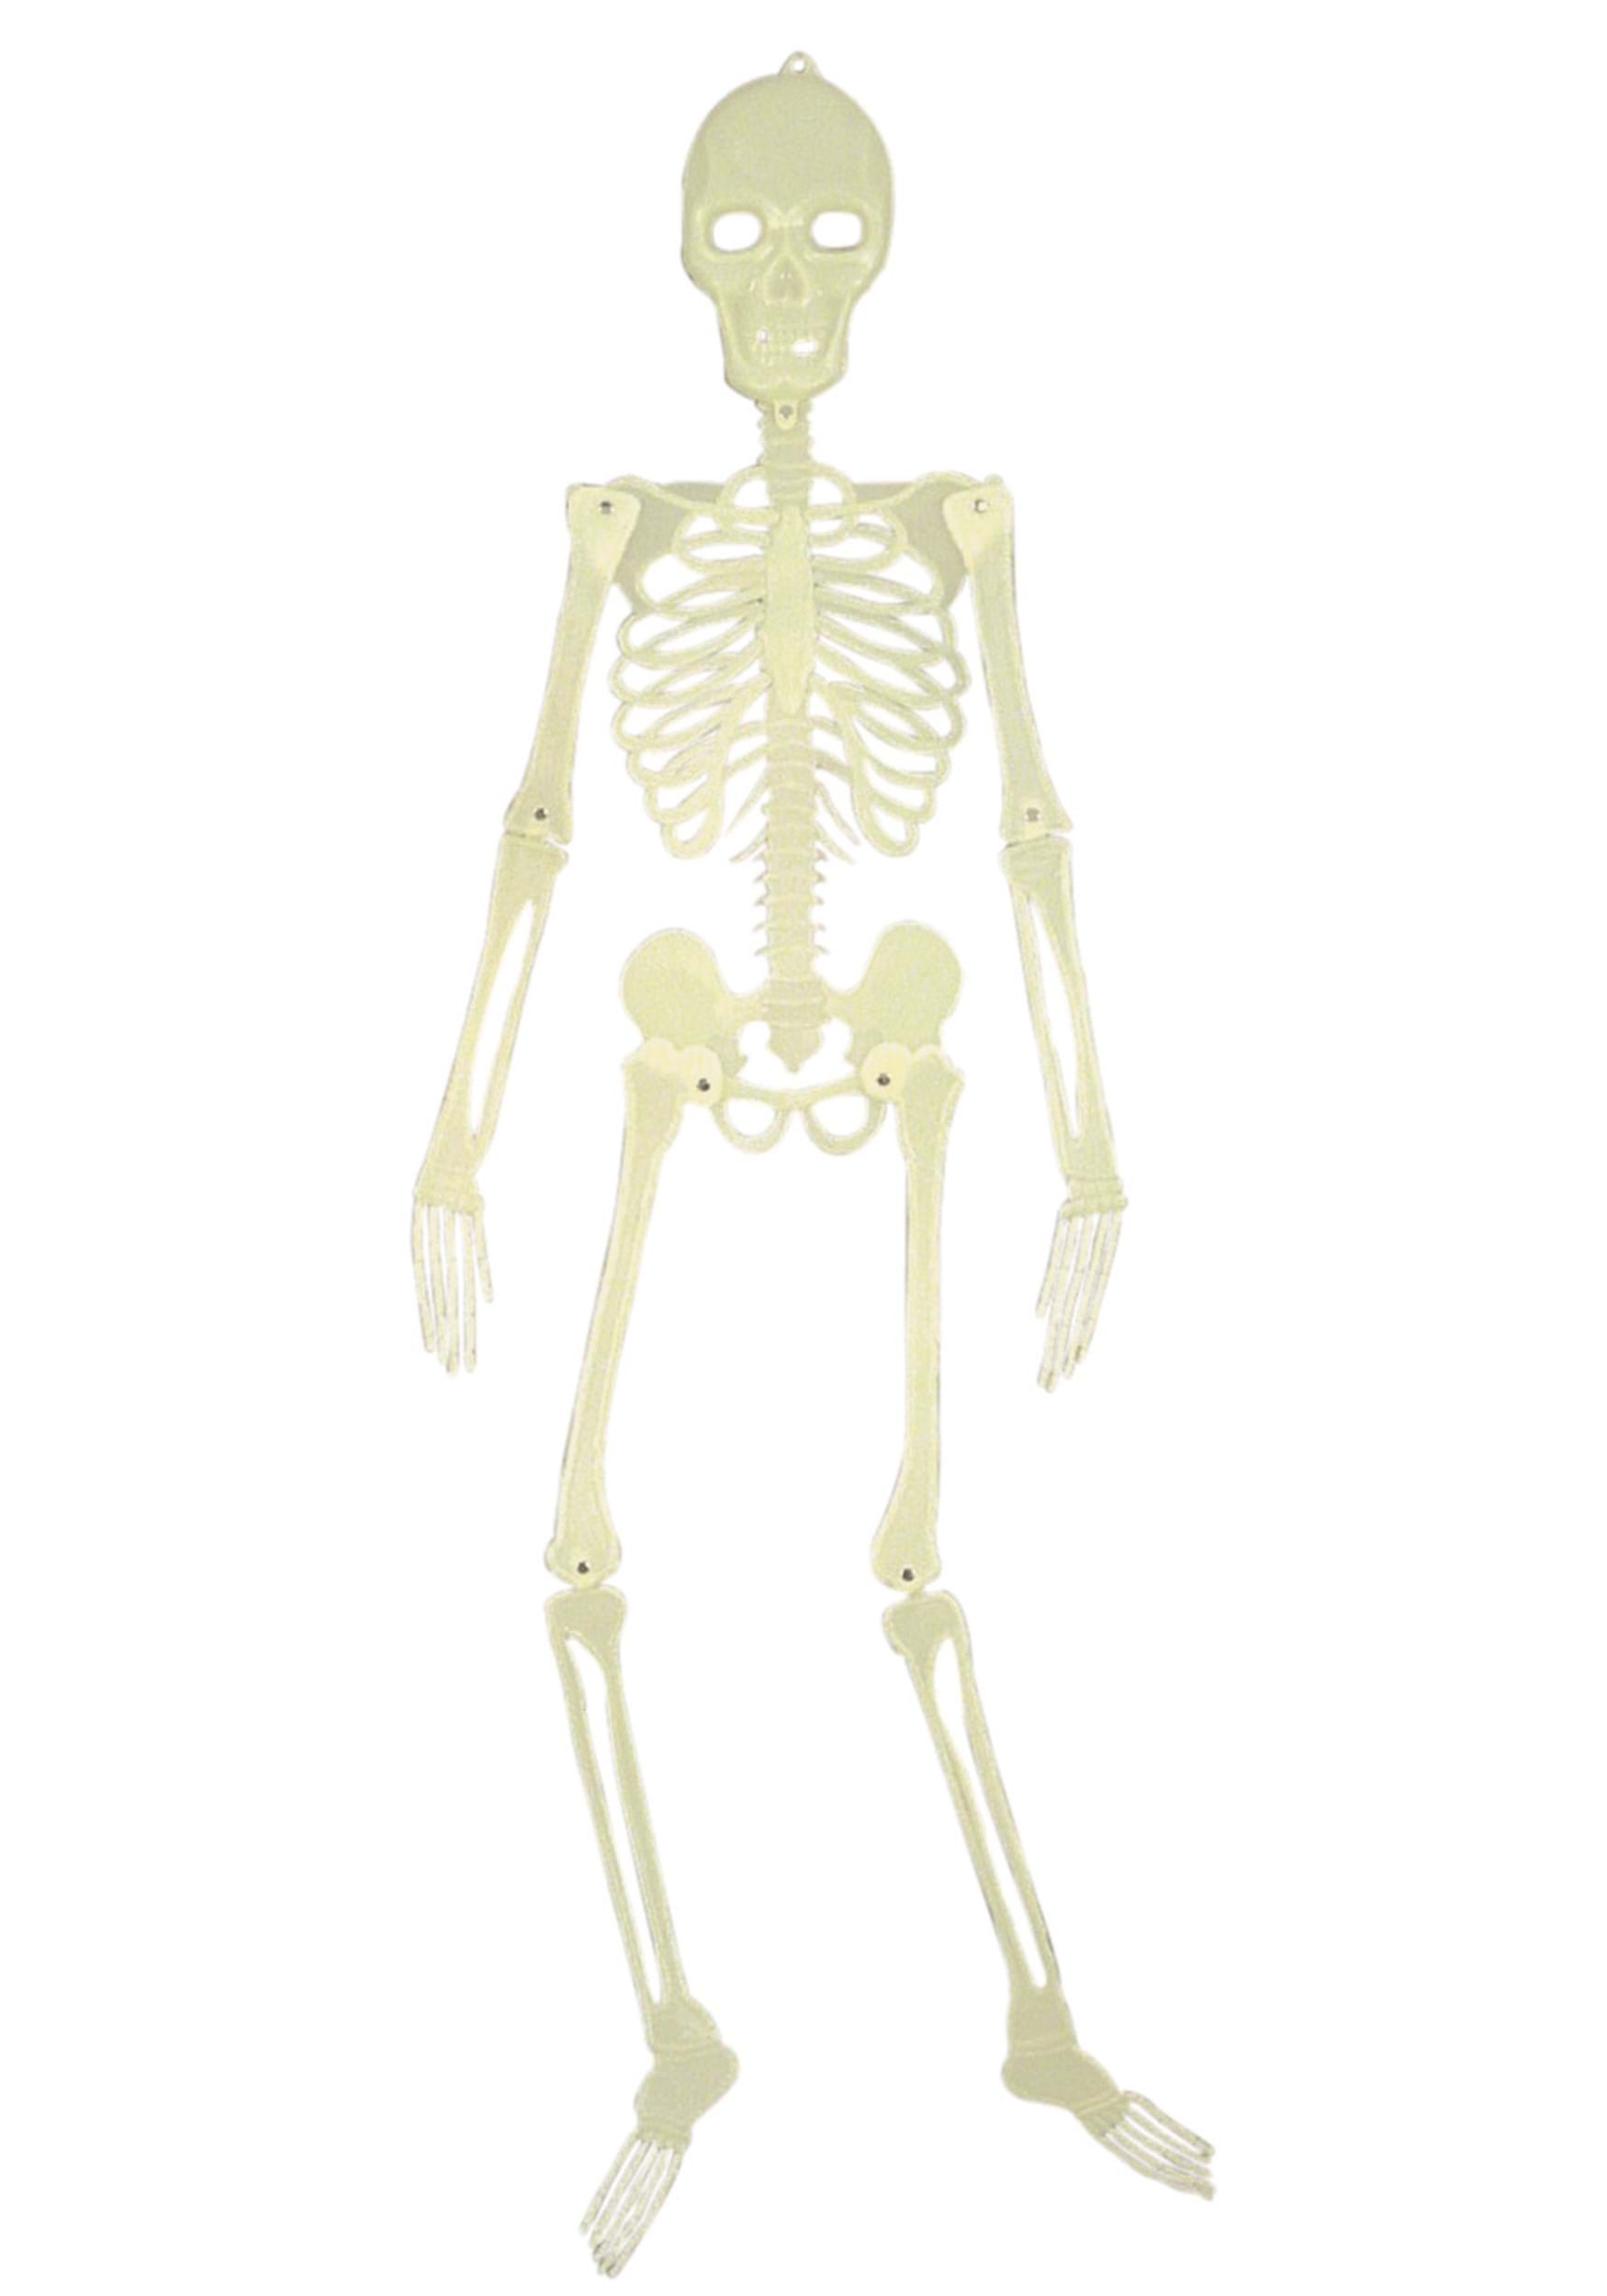 5′ Glow in the Dark Skeleton Prop